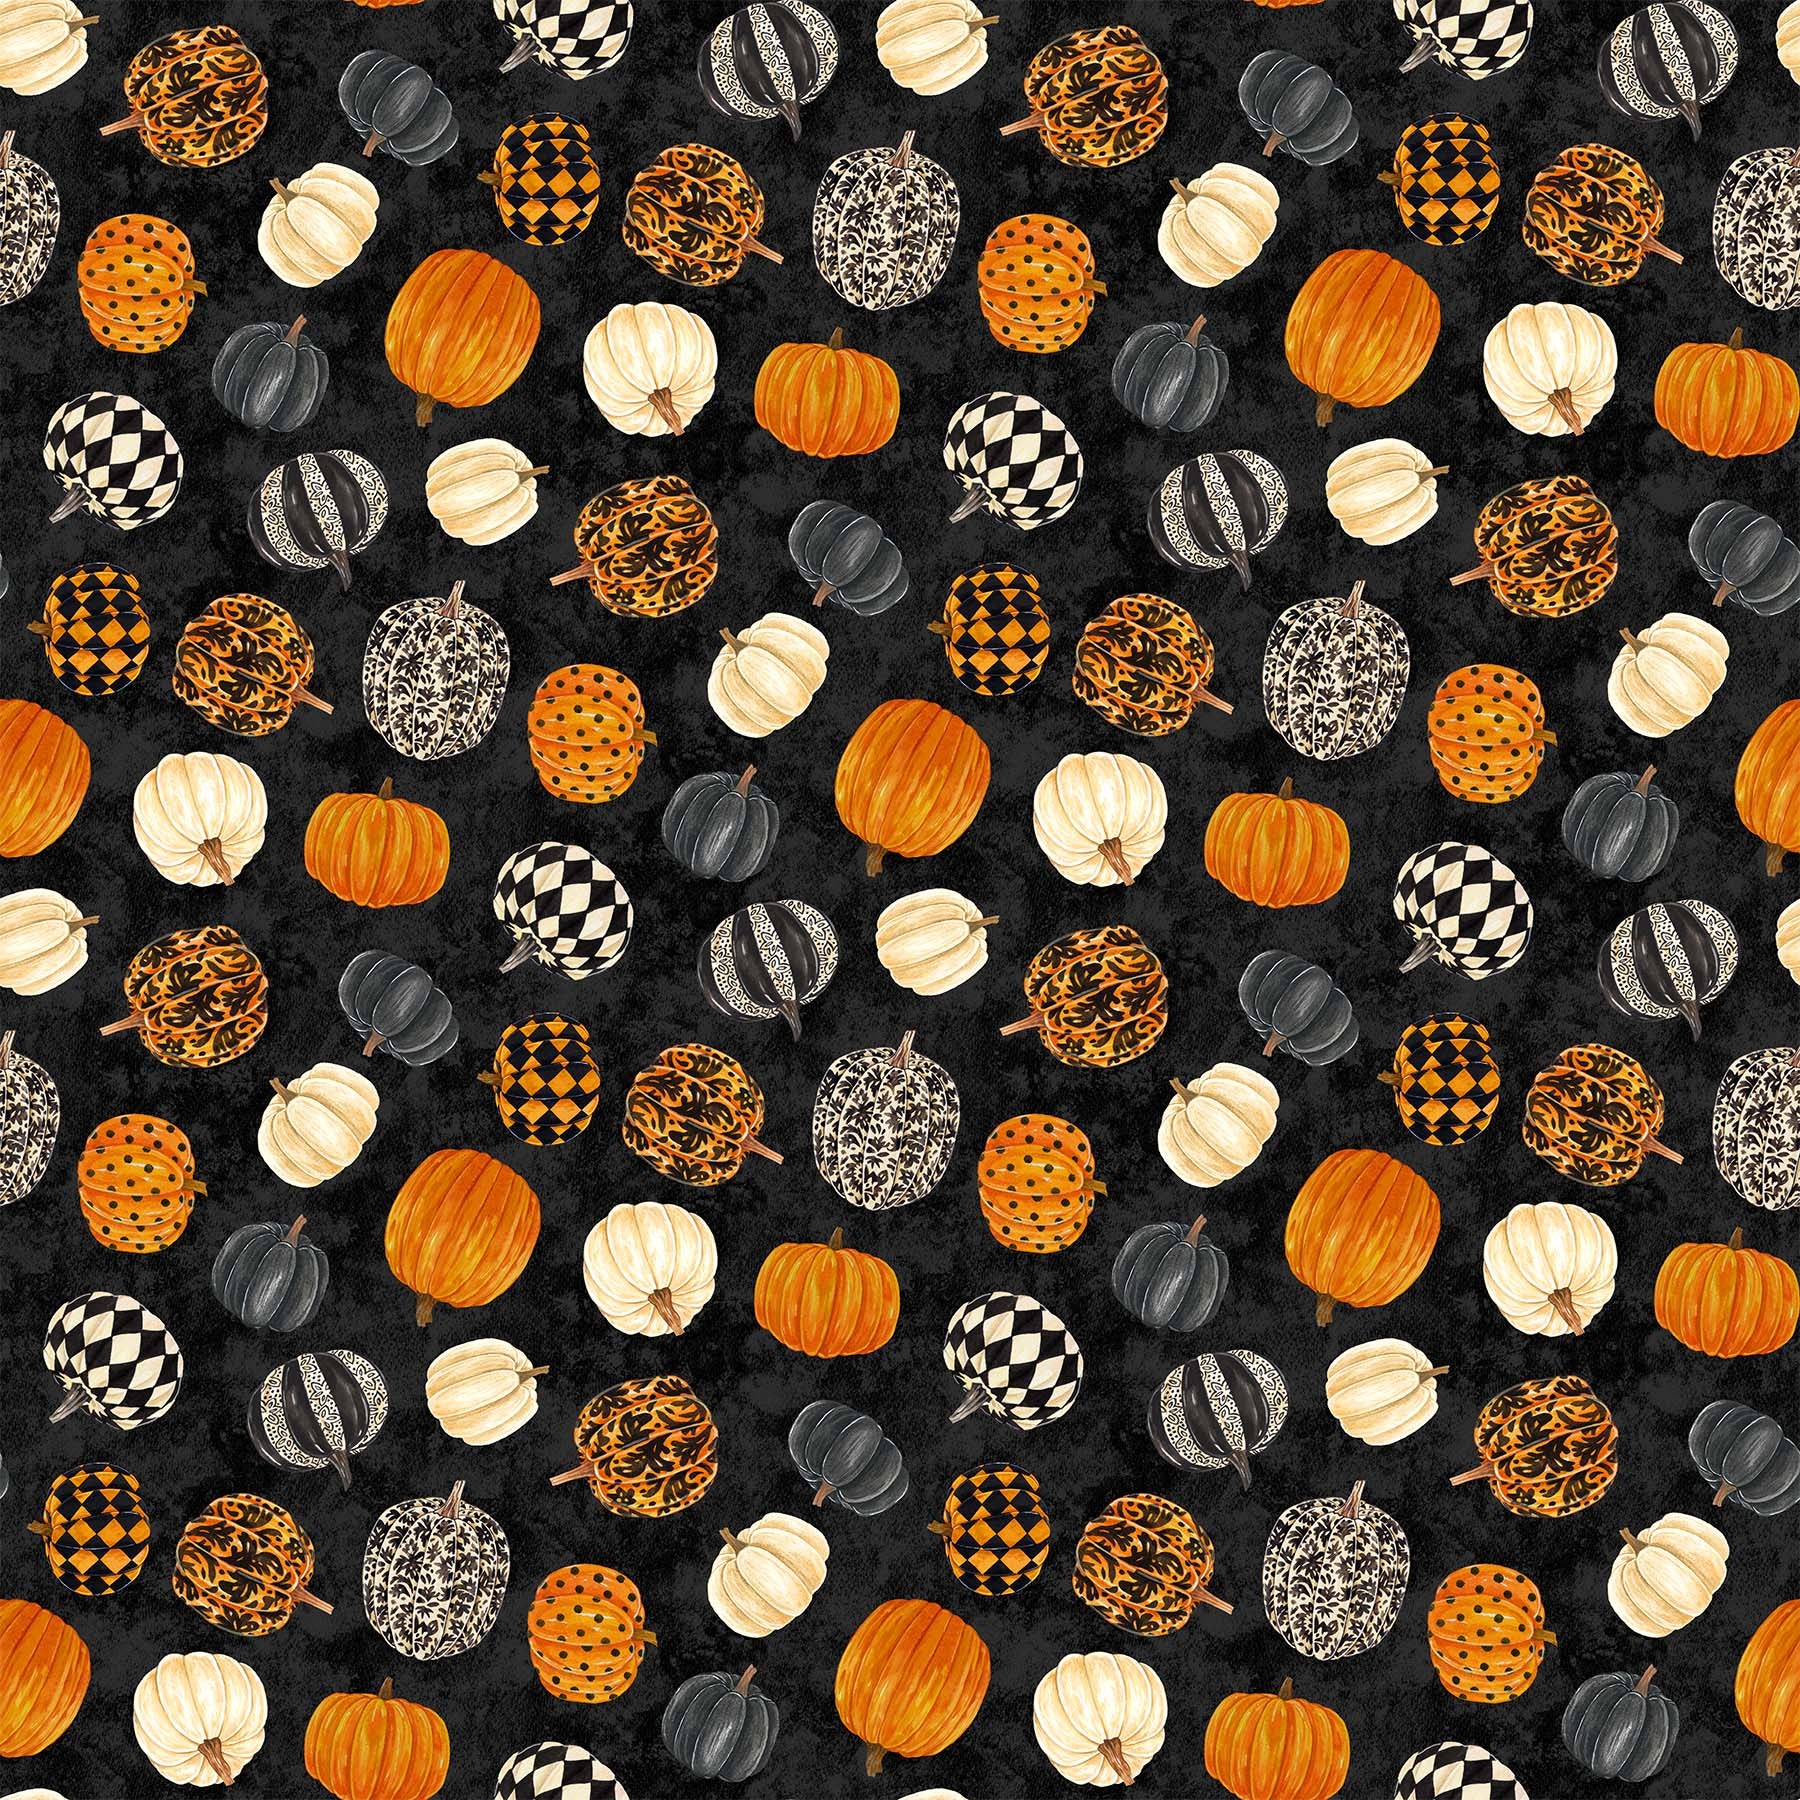 Fabric, Candelabra Black Multi Pumpkin Toss 24764-99